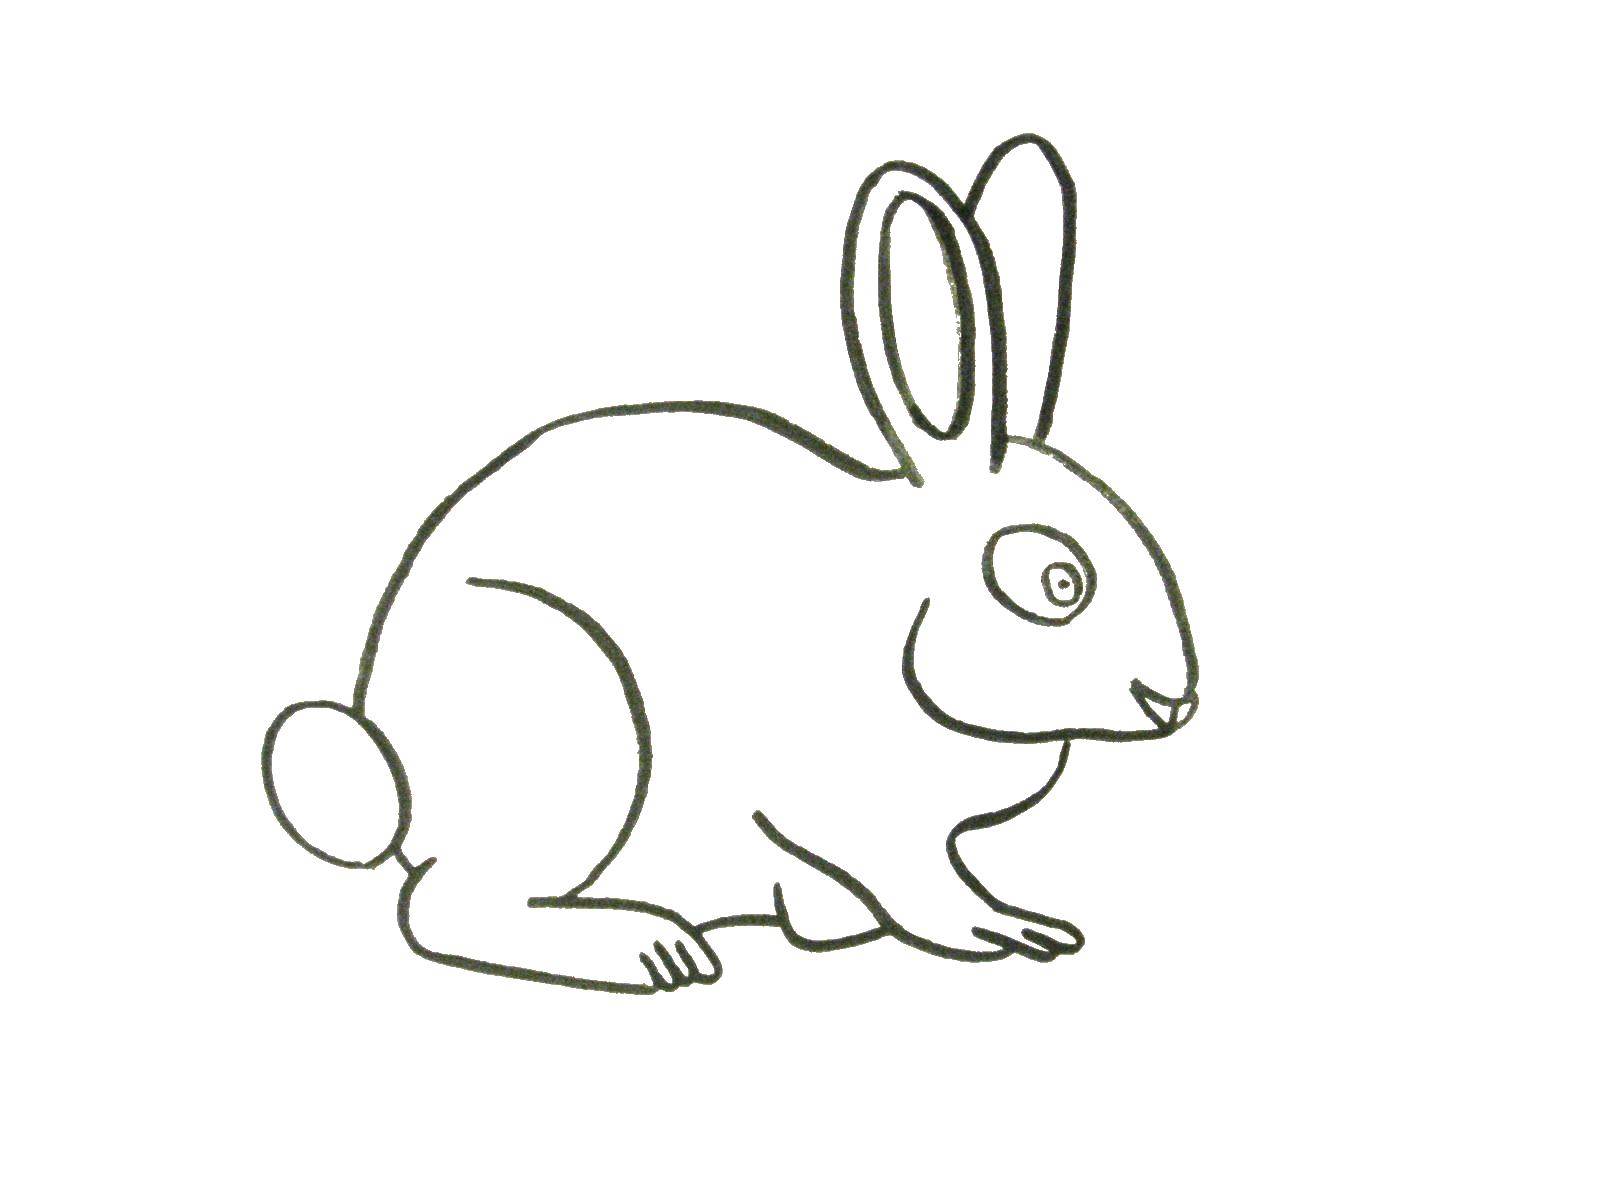 Название: Раскраска Граница зайчика. Категория: Контур зайца для вырезания. Теги: контур, заяц, уши.